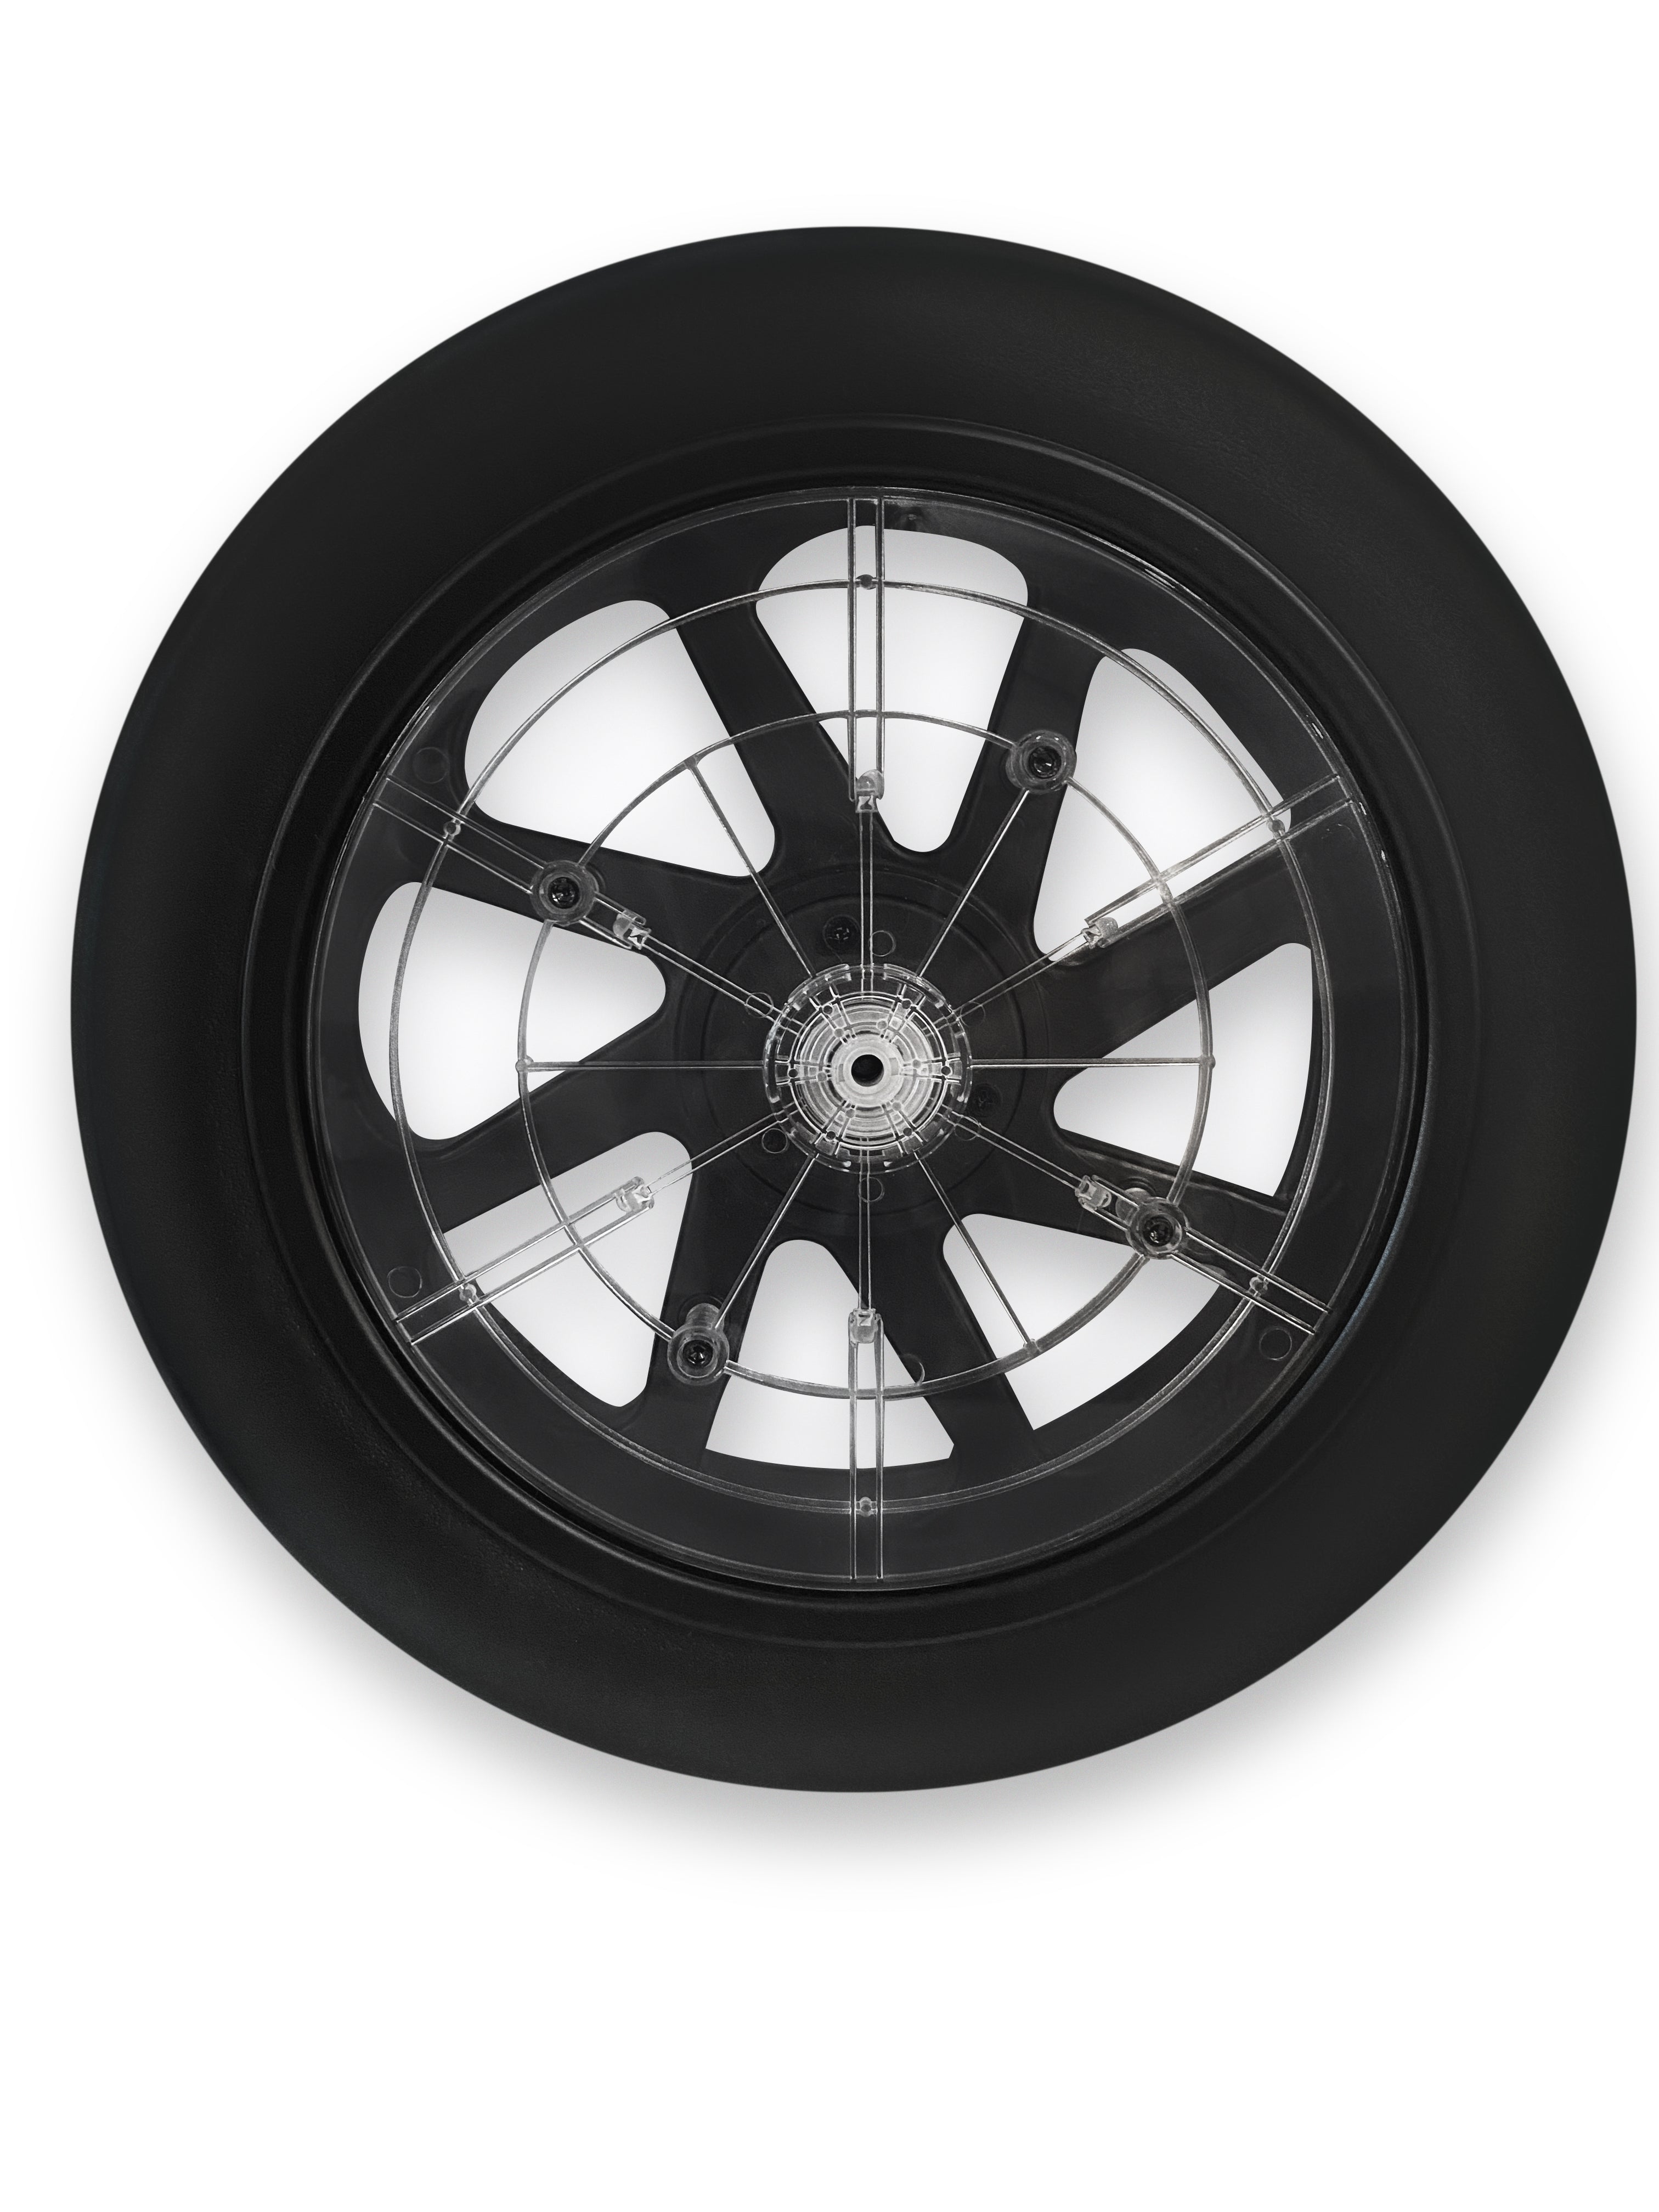 Spare Front Wheel (Romper)